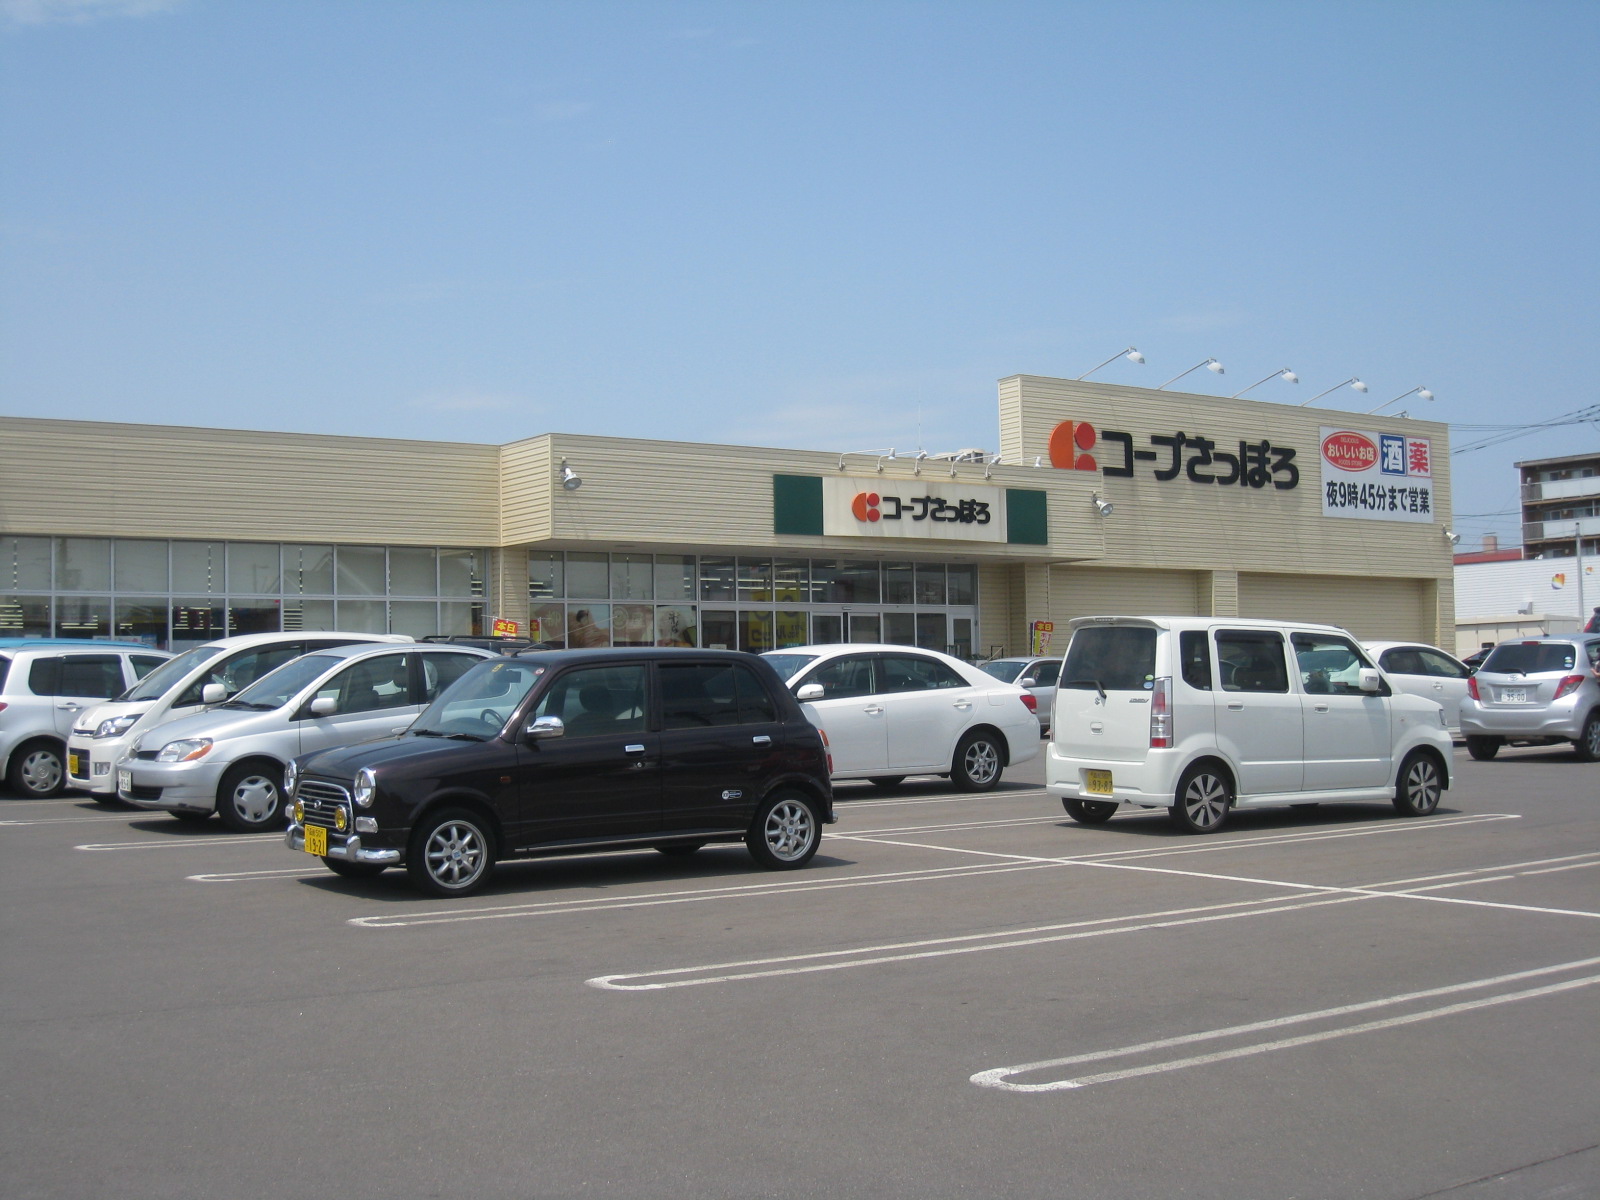 Shopping centre. 834m until Hitomi shopping center (shopping center)